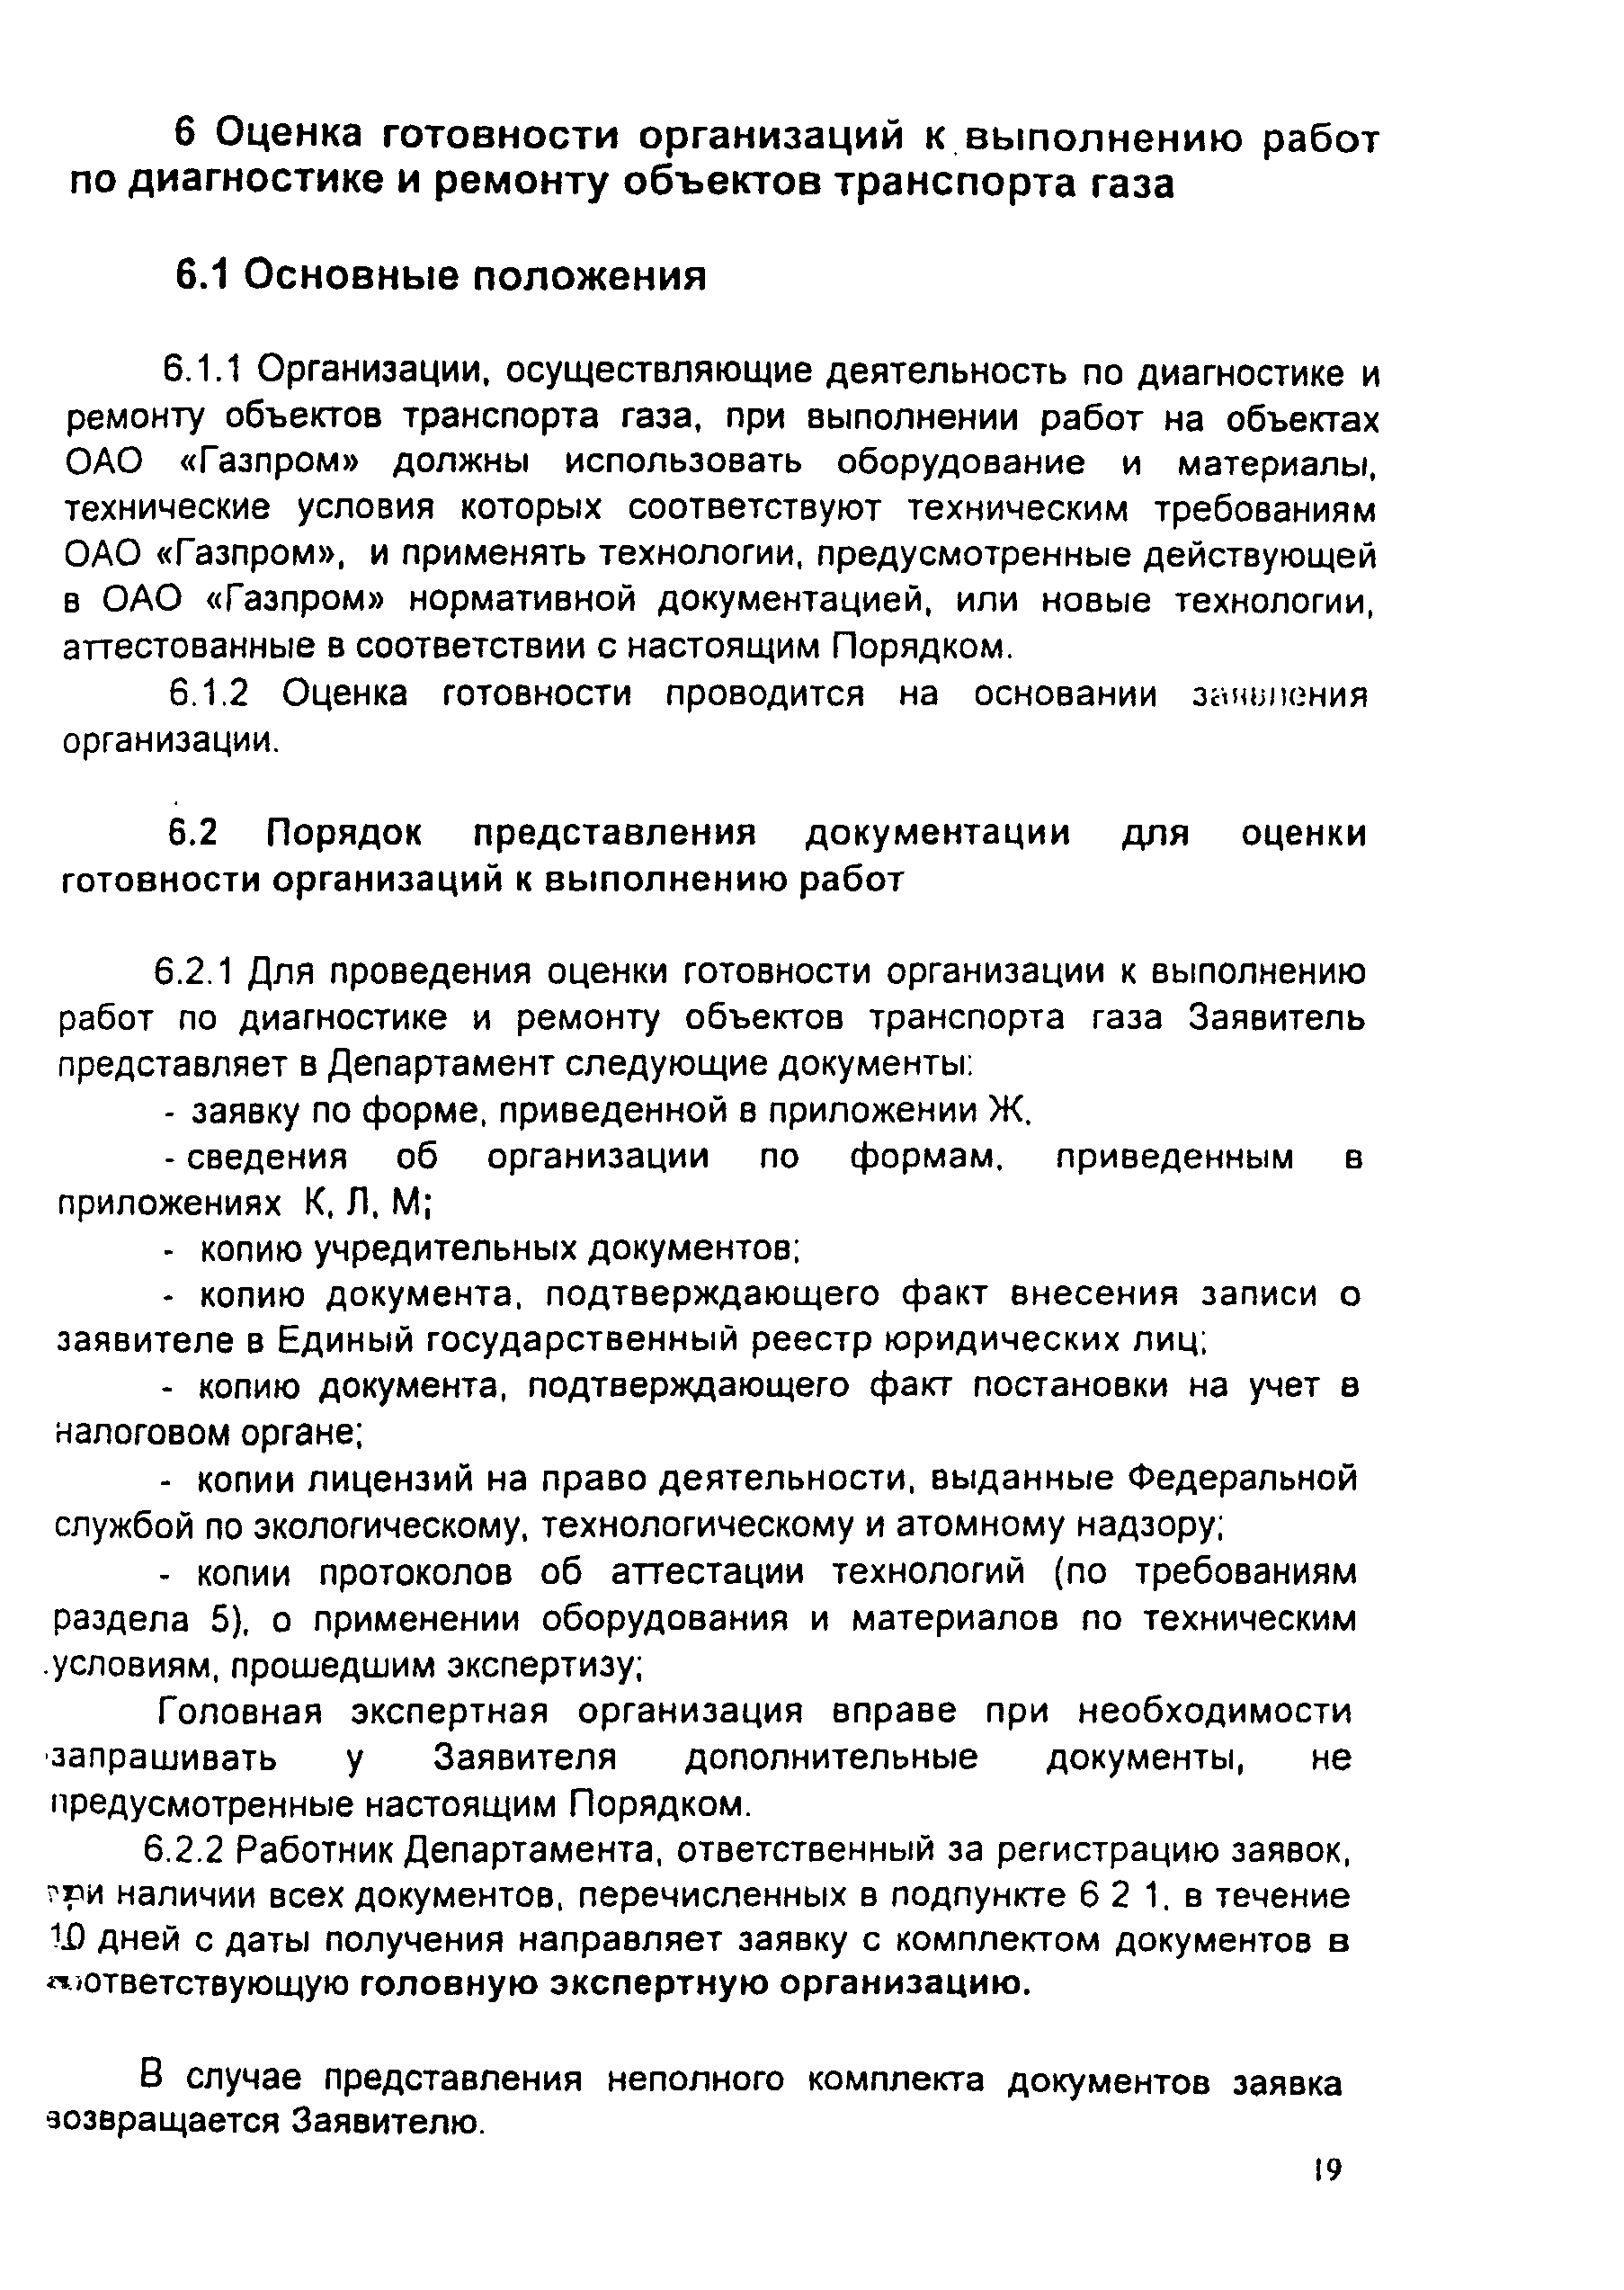 СТО Газпром 2-3.5-046-2006